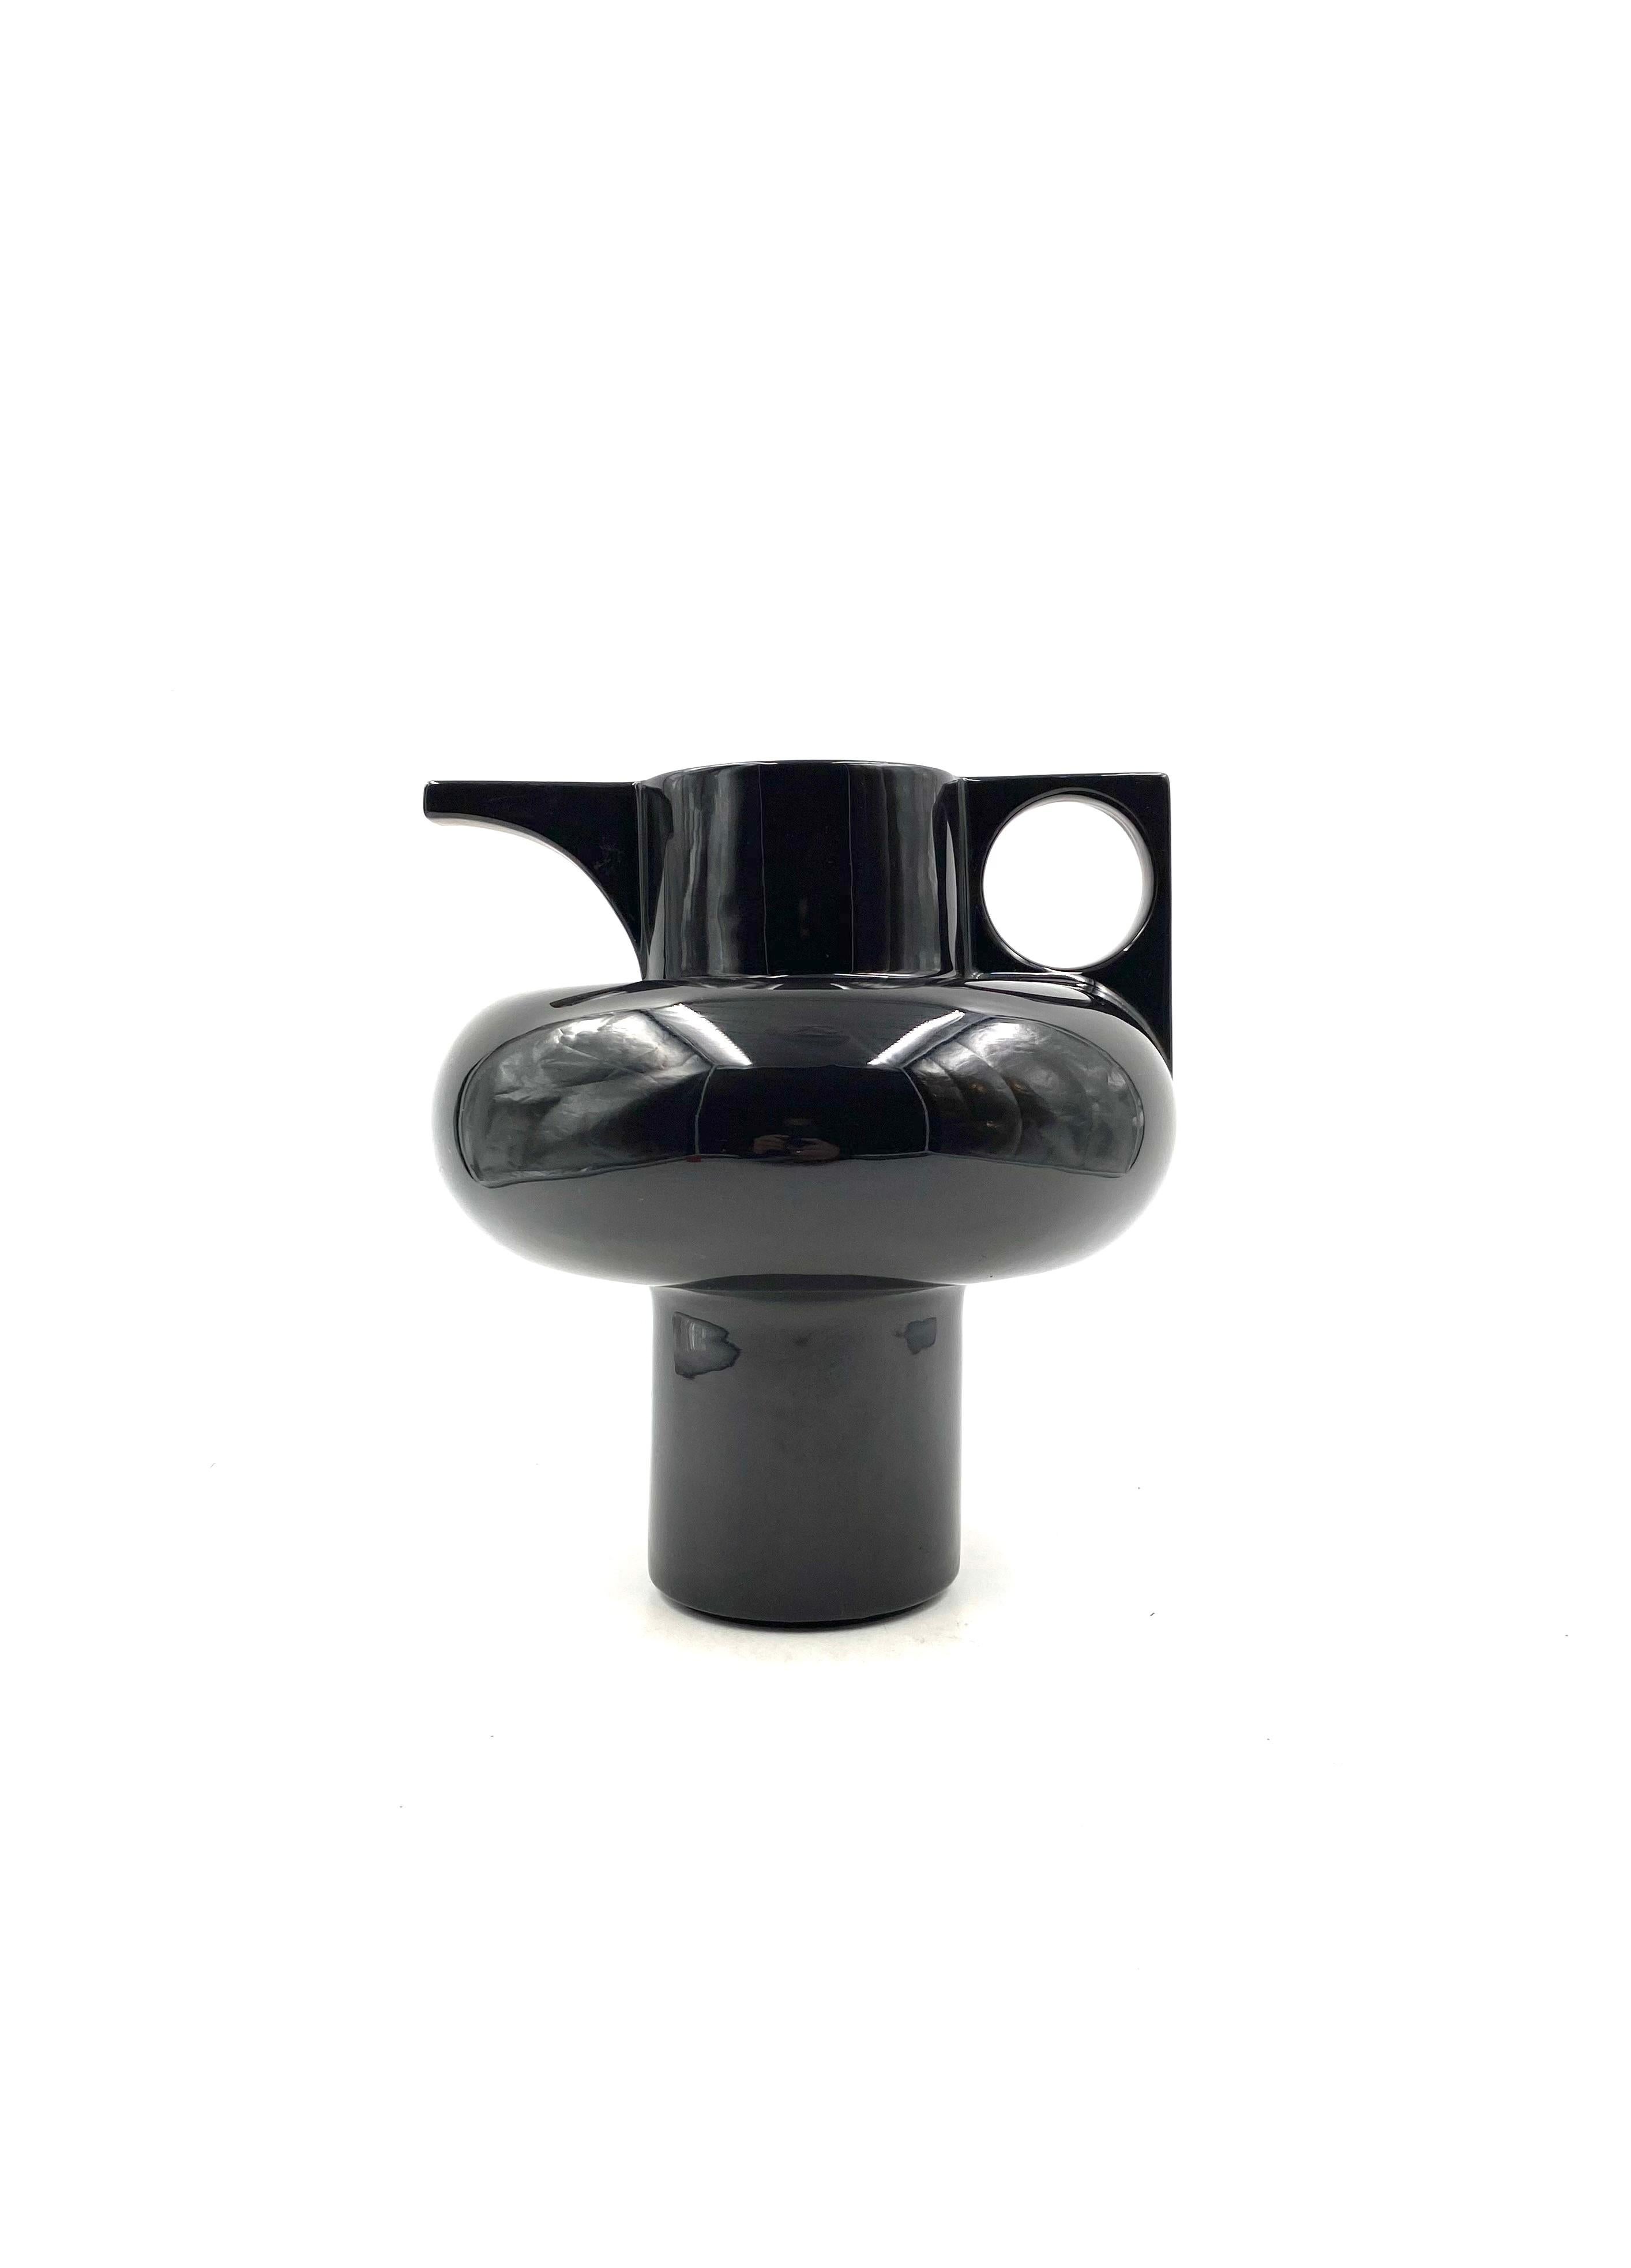 Space Age Sergio Asti, Modern black ceramic vase / pitcher, Cedit Italy 1969 For Sale